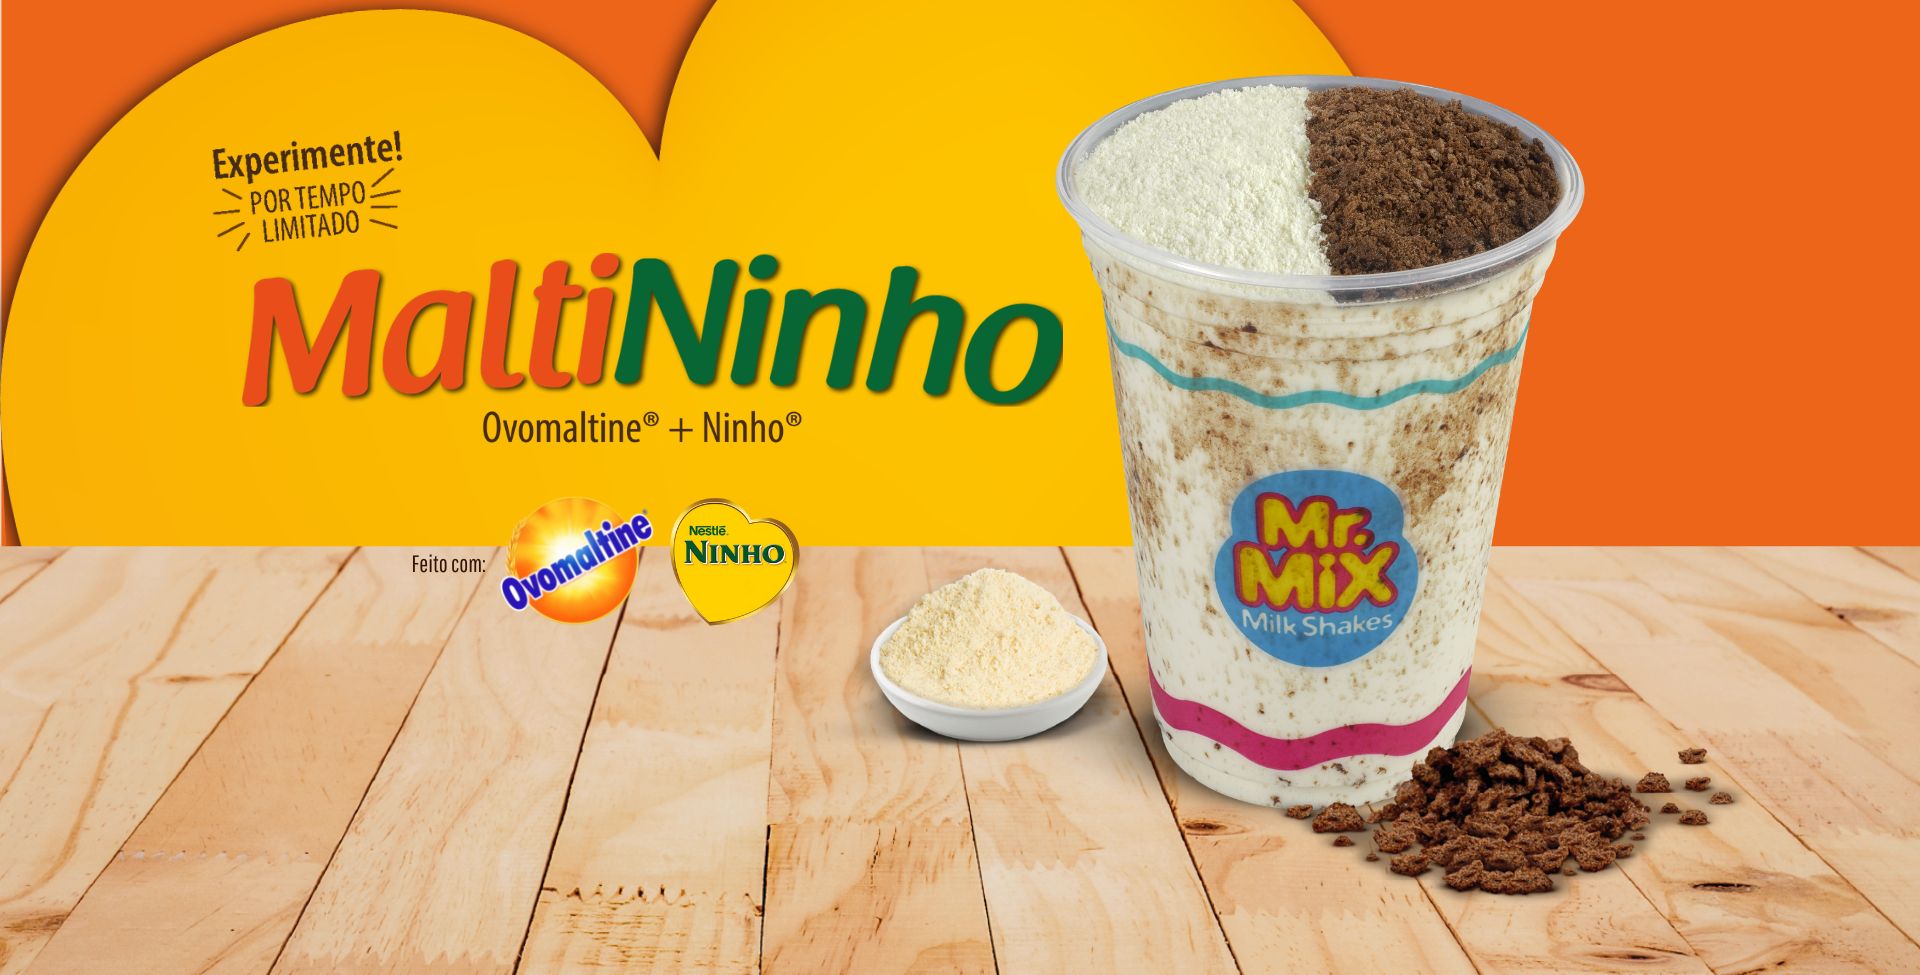 Milk Shake MaltiNinho (Ovomaltine® com Ninho®) chega às lojas Mr. Mix